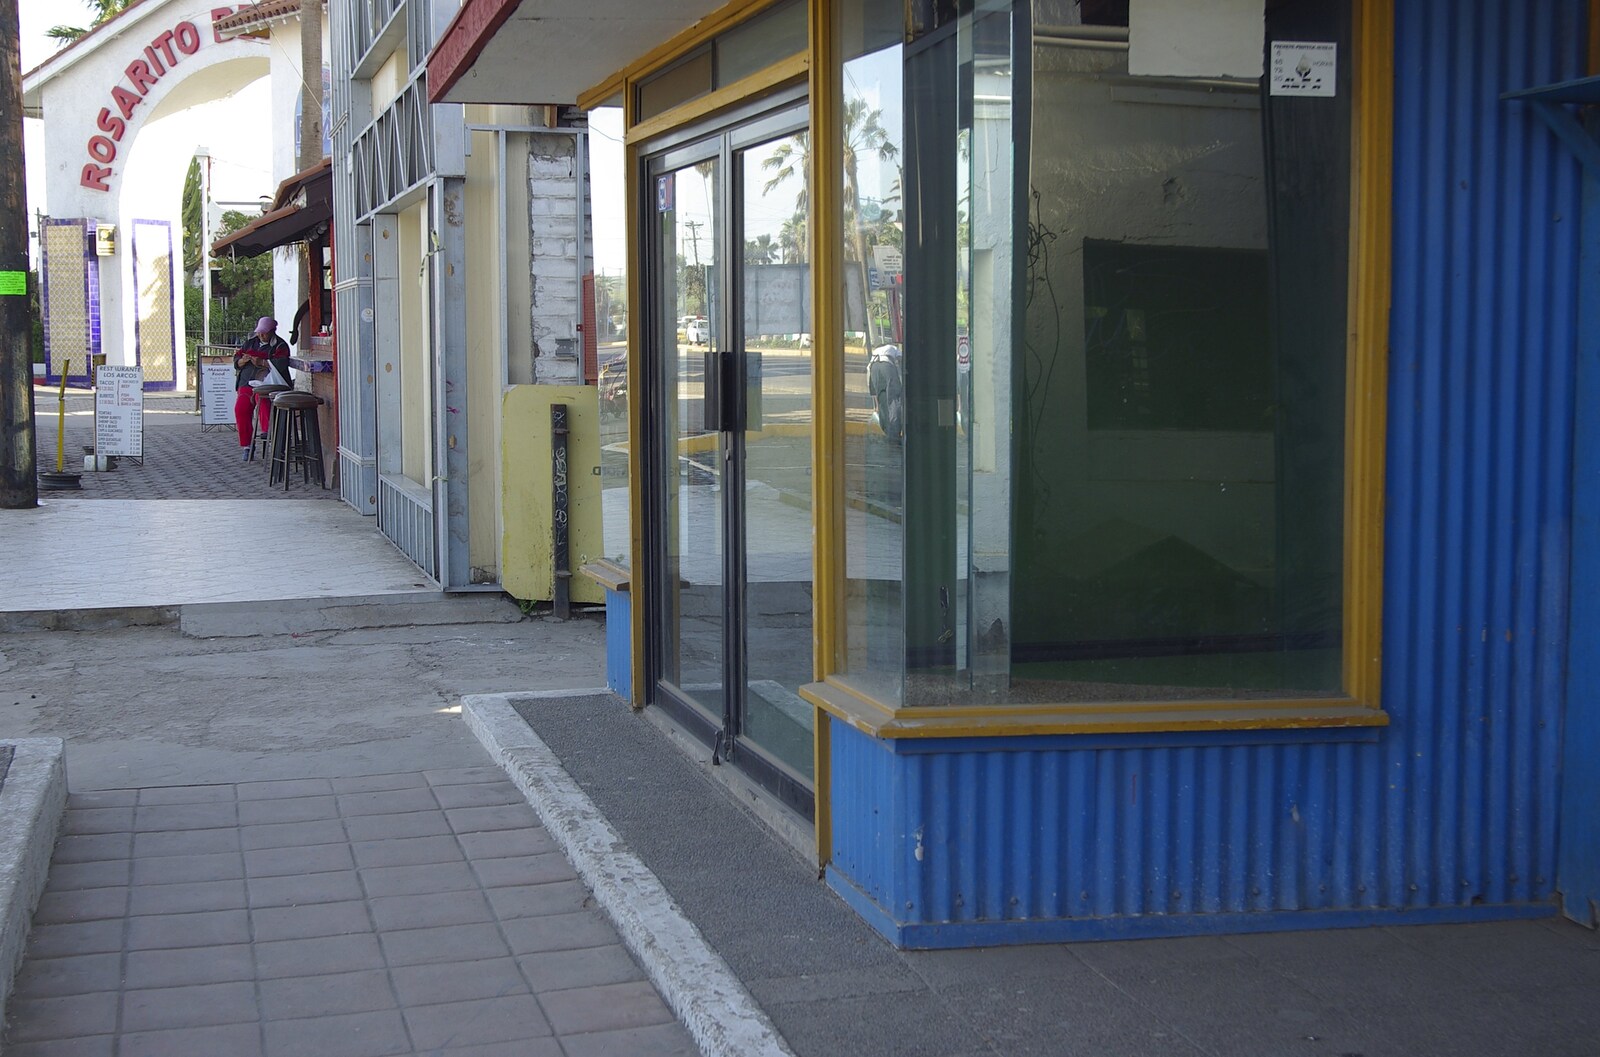 Rosarito and Tijuana, Baja California, Mexico - 2nd March 2008: An empty shop